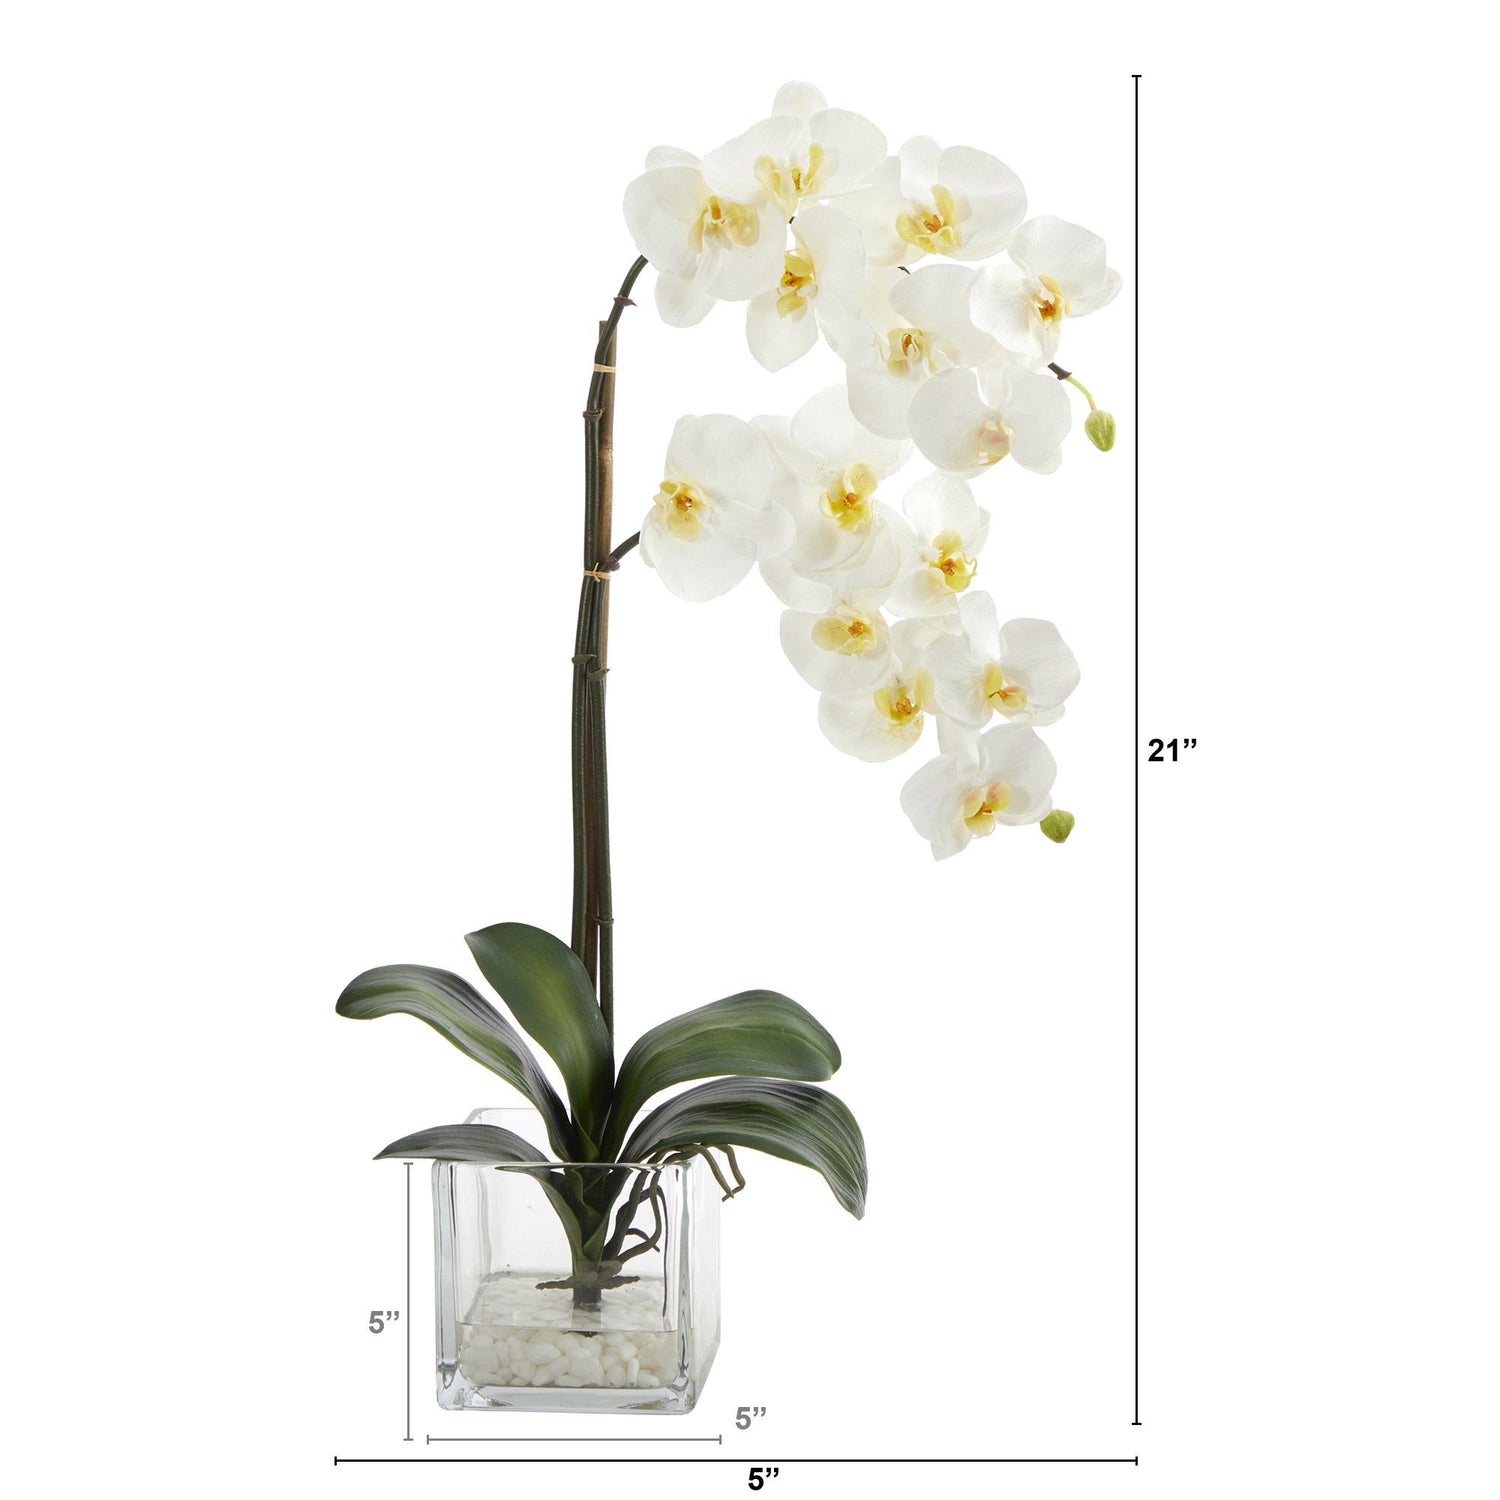 21” Phalaenopsis Orchid Artificial Arrangement in Glass Vase